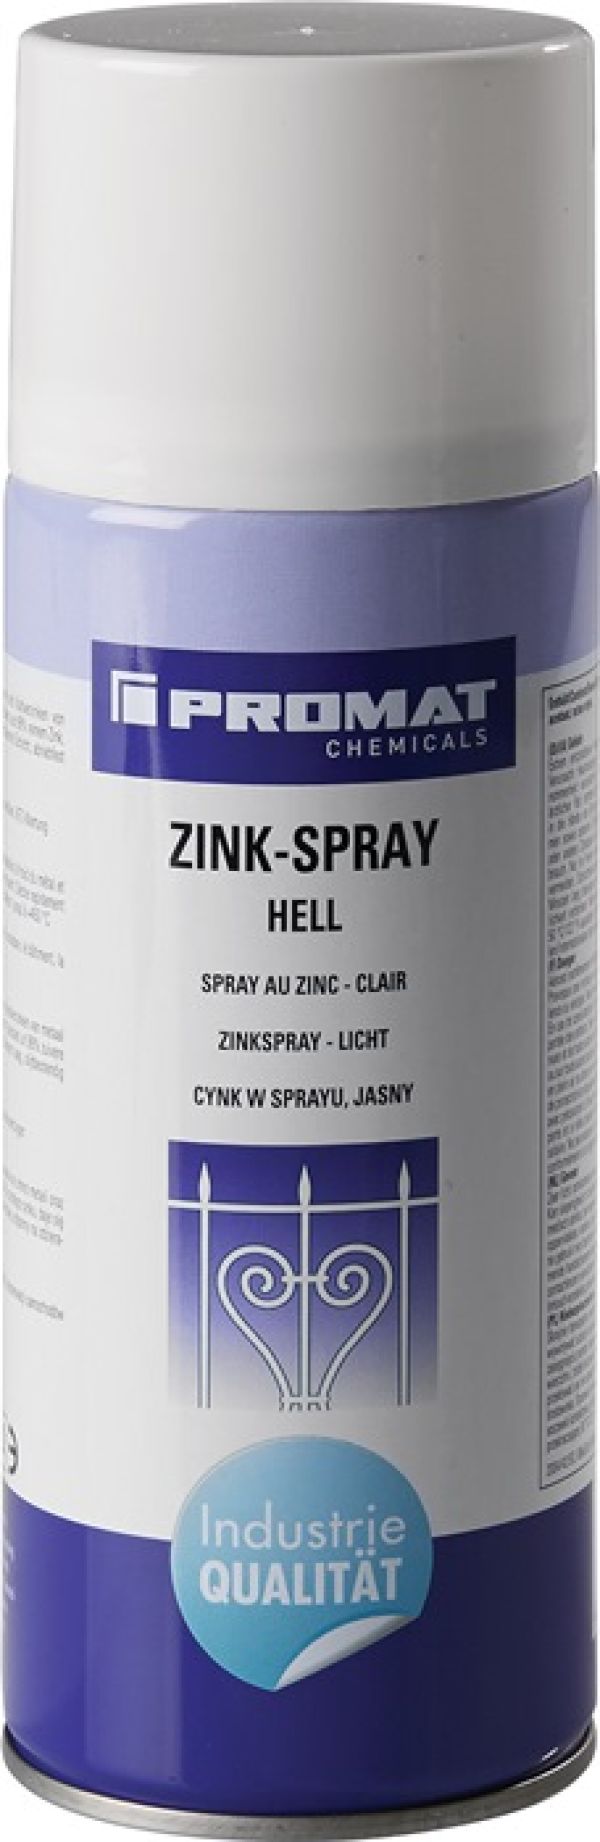 Zinkspray hell 400 ml weißalu.Spraydose PROMAT CHEMICALS